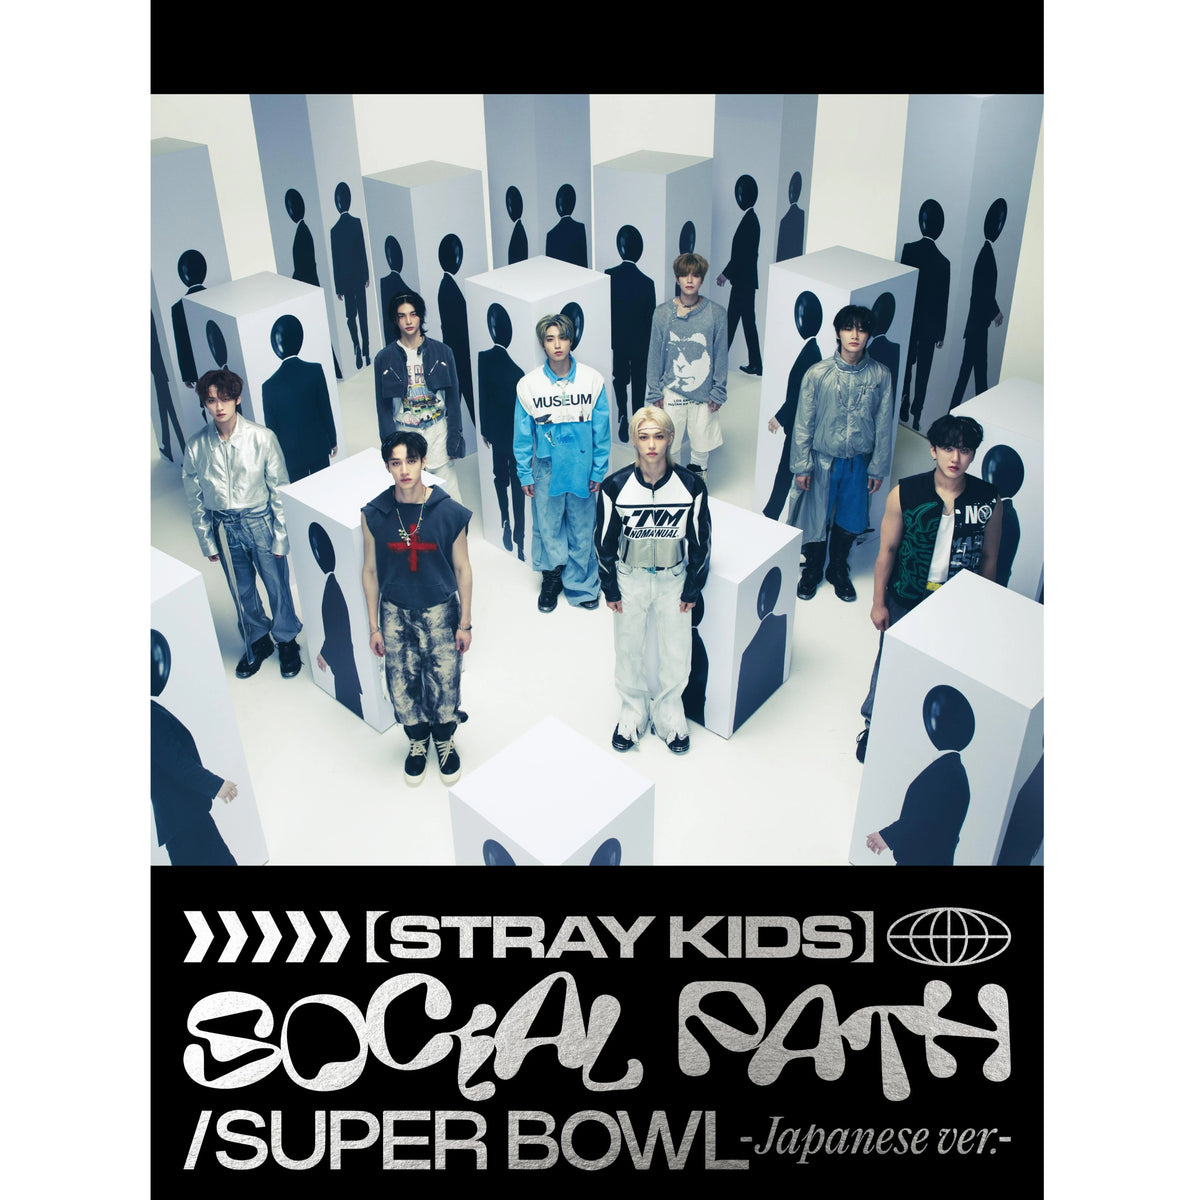 STRAY KIDS JAPAN 1ST EP ALBUM - SOCIAL PATH (FEAT. LISA) / SUPER 